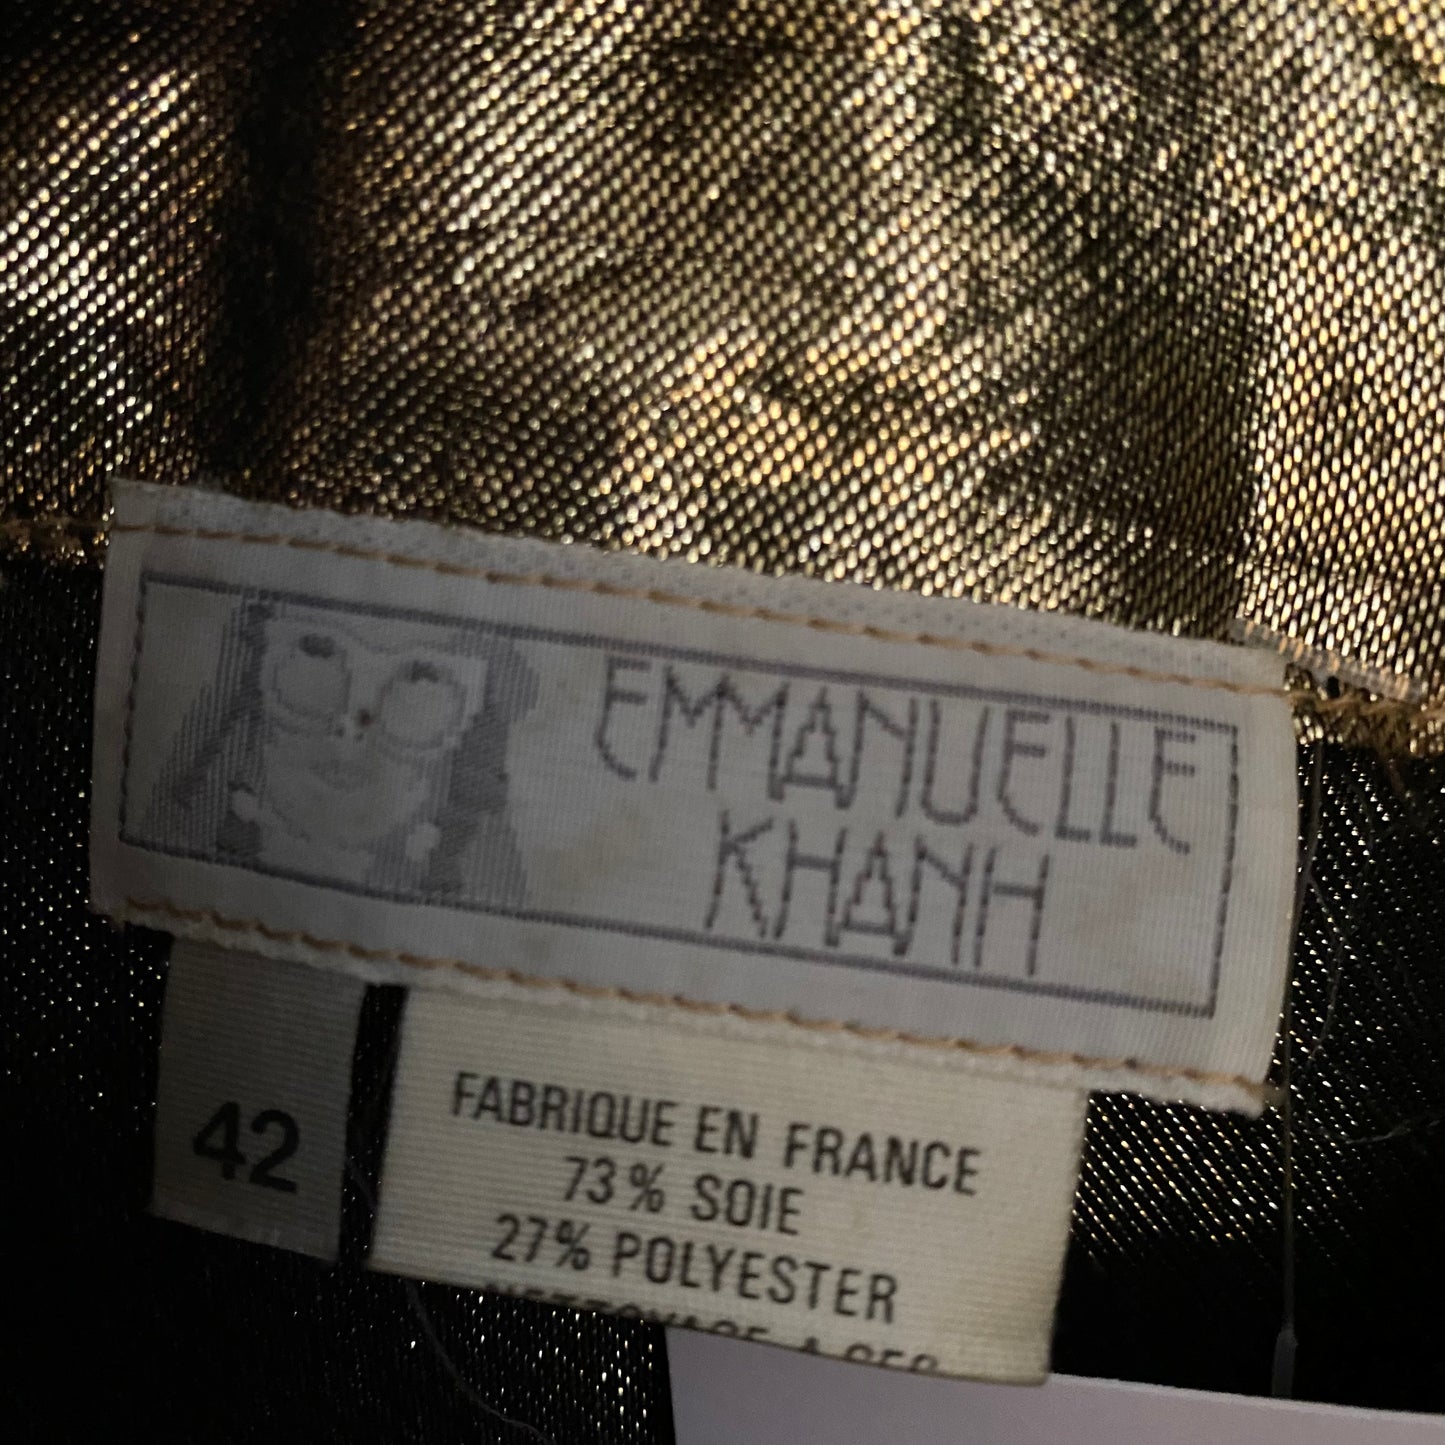 EMMANUELLE KHANH Tops vintage Lysis Paris pre-owned secondhand